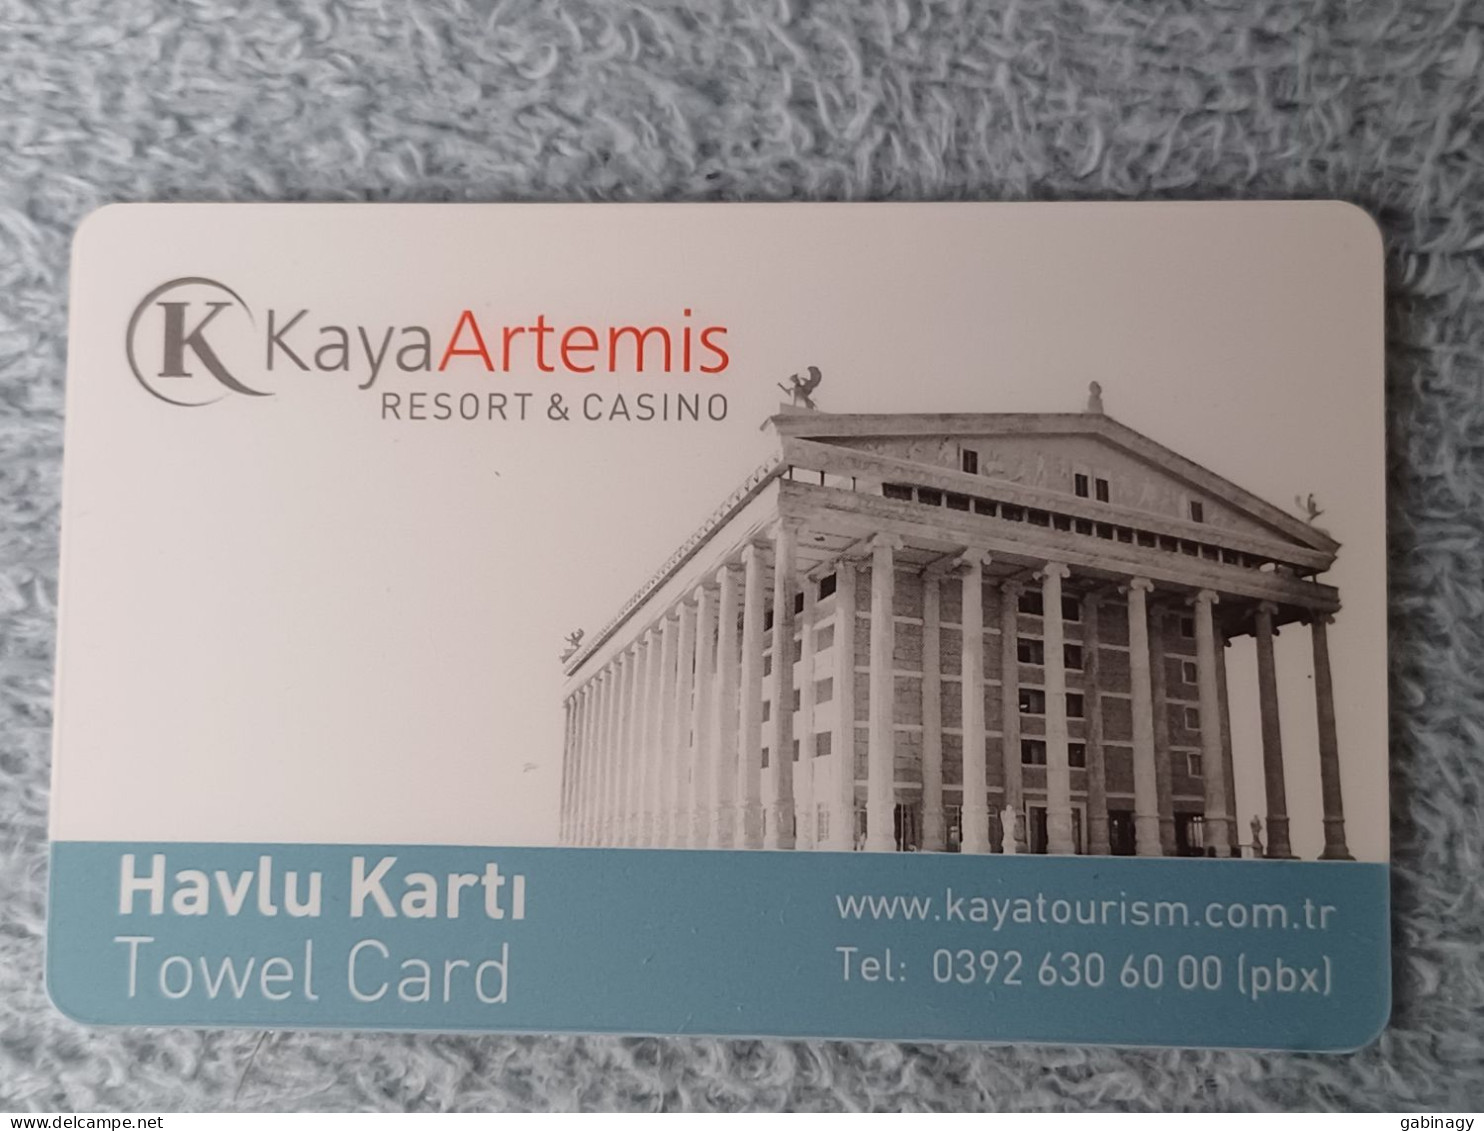 HOTEL KEYS - 2596 - TURKEY - KAYA ARTEMIS RESORT & CASINO - Hotelkarten